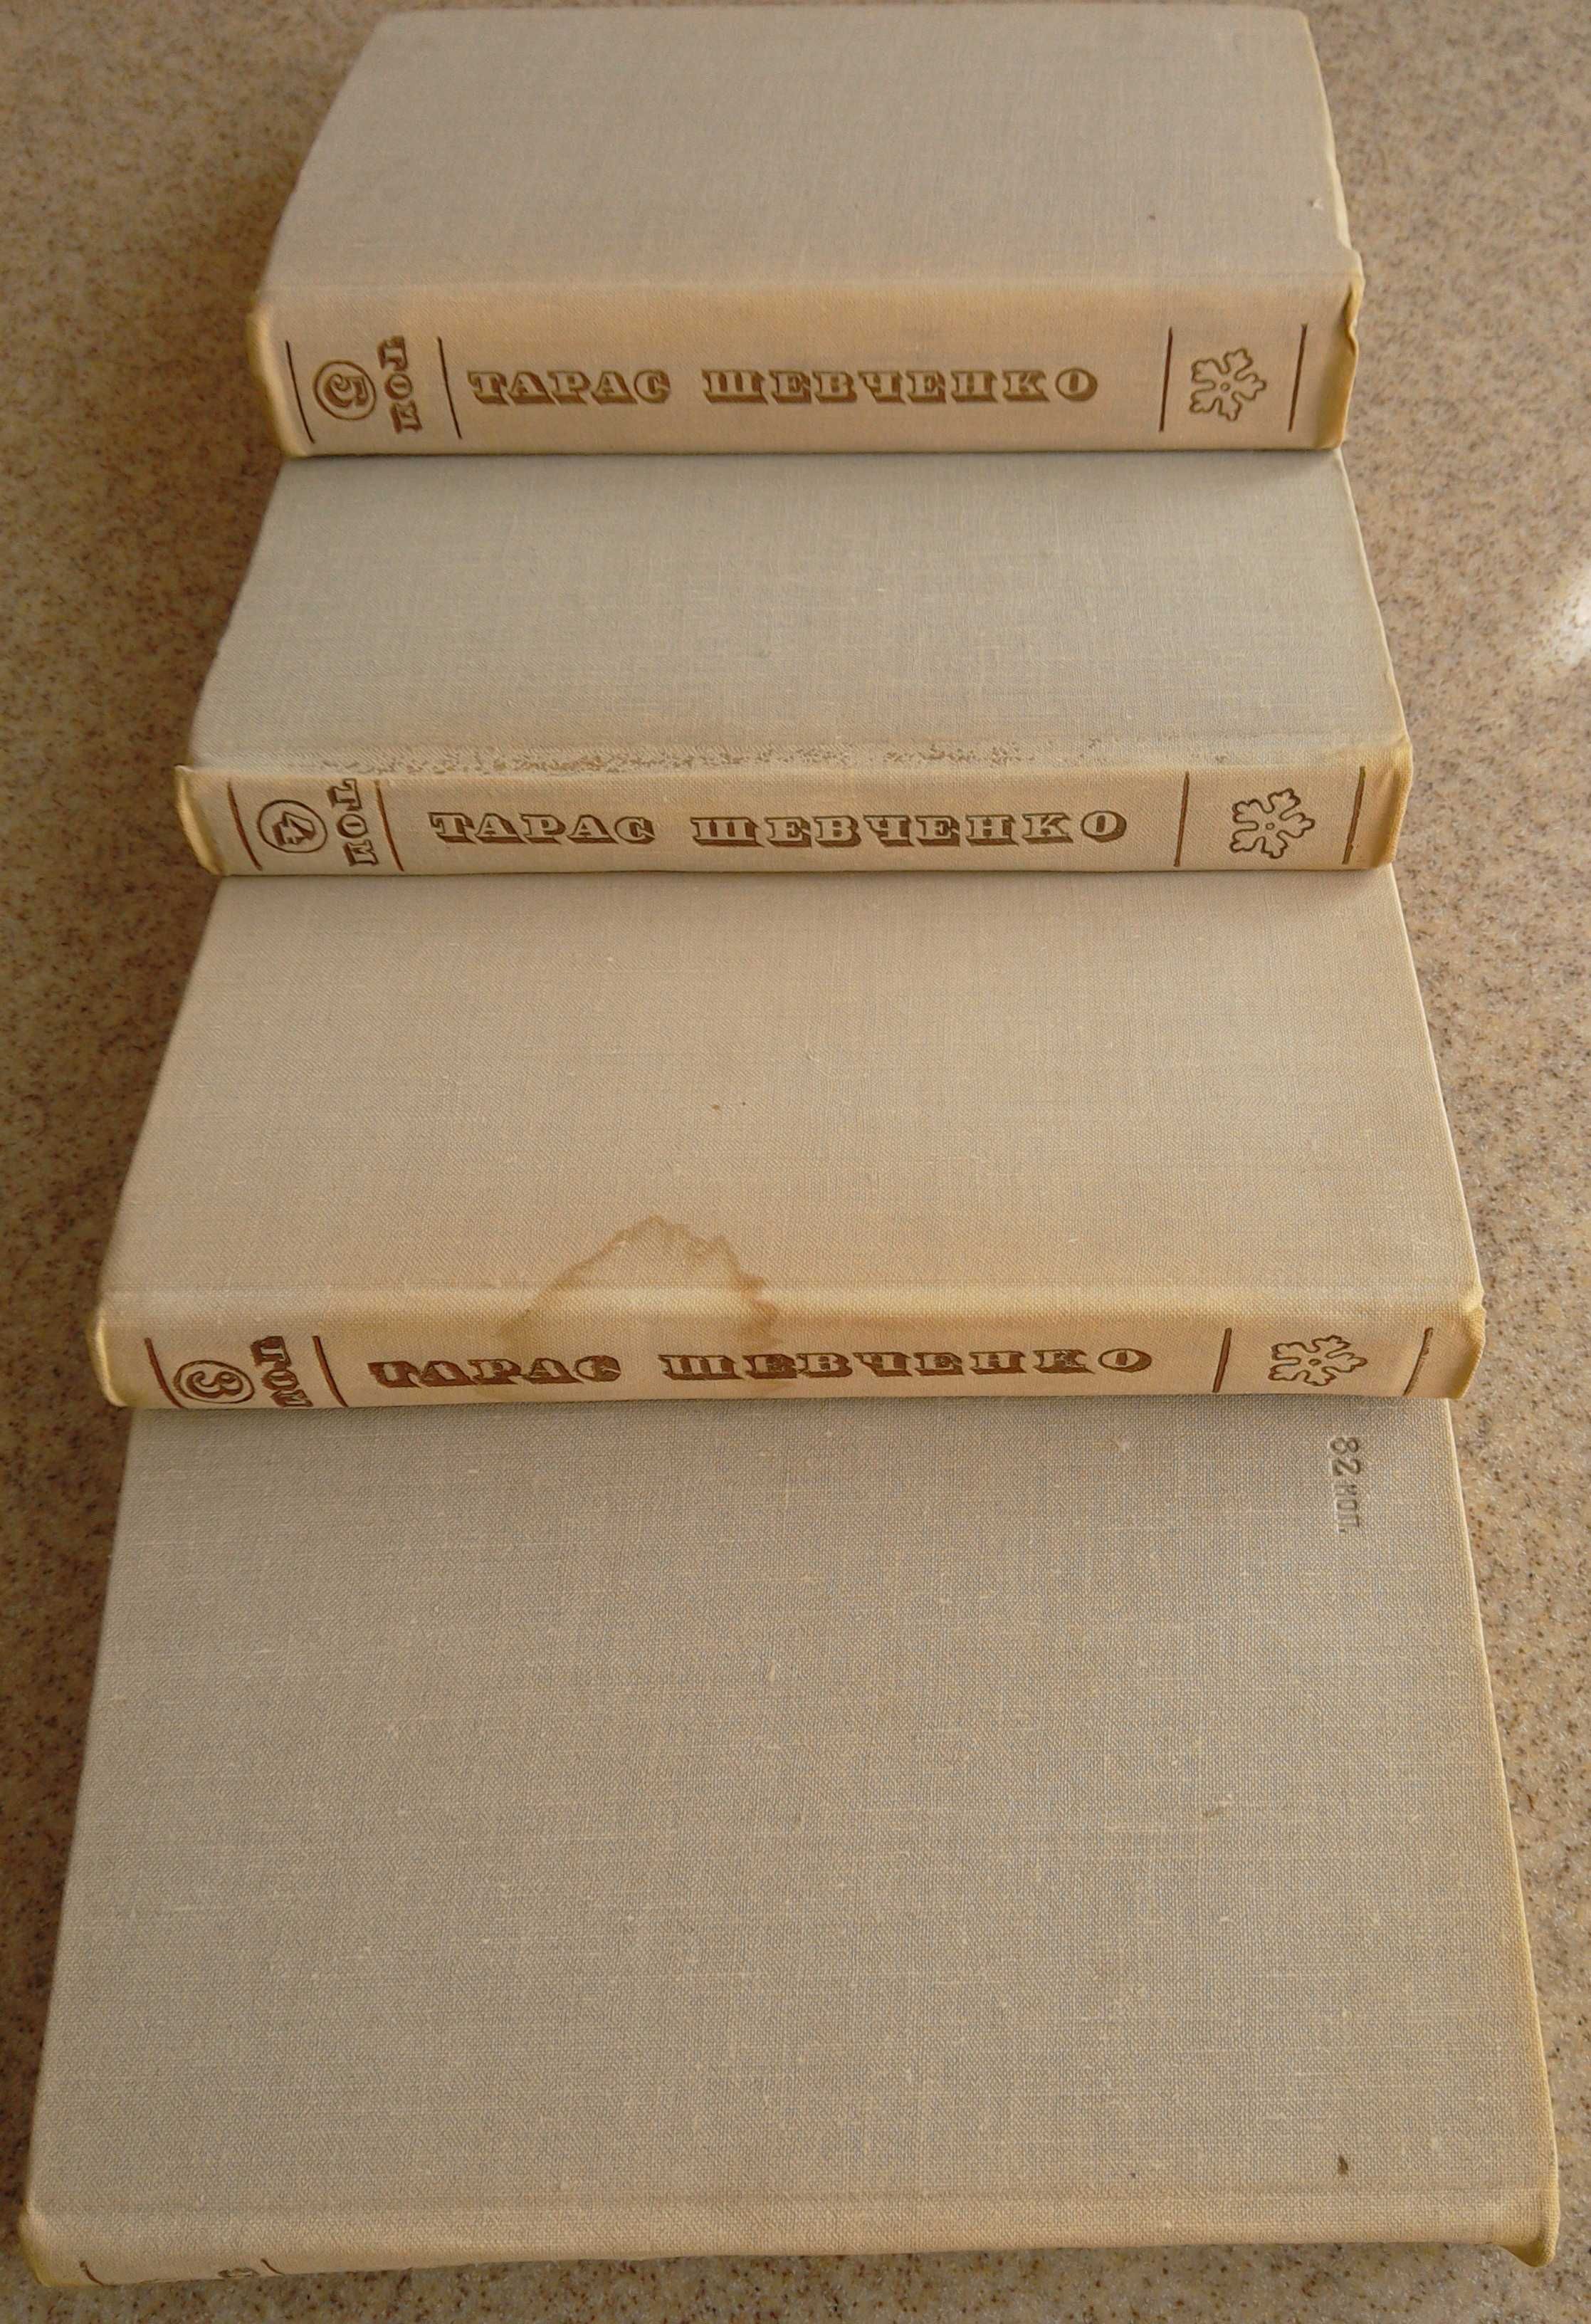 Твори Тараса Шевченка 2, 3, 4, 5 томи из 5 томів,
 1970 год